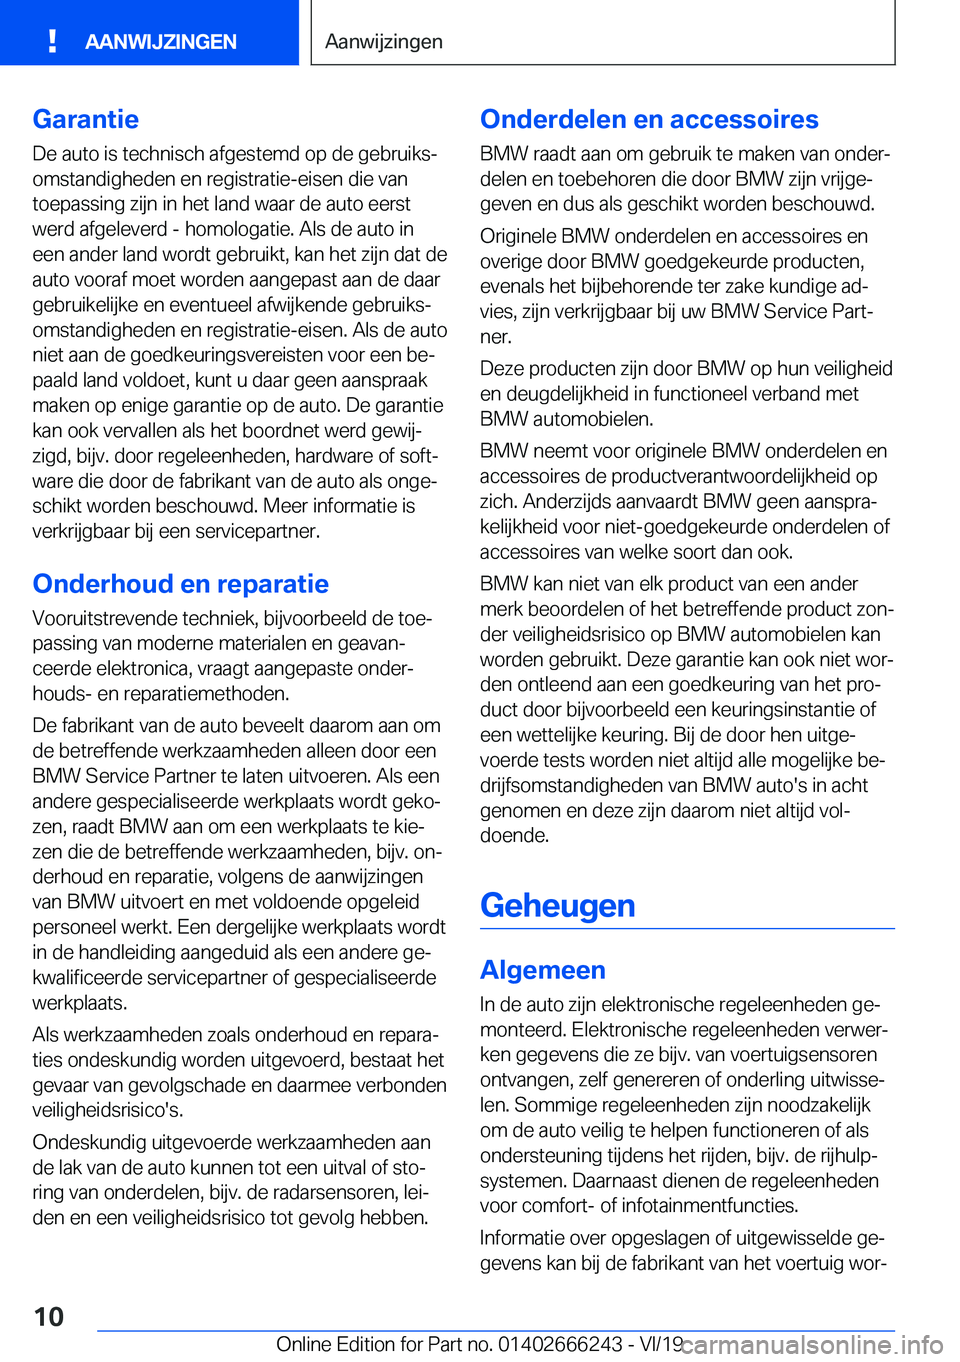 BMW 2 SERIES COUPE 2020  Instructieboekjes (in Dutch) �G�a�r�a�n�t�i�e�D�e��a�u�t�o��i�s��t�e�c�h�n�i�s�c�h��a�f�g�e�s�t�e�m�d��o�p��d�e��g�e�b�r�u�i�k�sj
�o�m�s�t�a�n�d�i�g�h�e�d�e�n��e�n��r�e�g�i�s�t�r�a�t�i�e�-�e�i�s�e�n��d�i�e��v�a�n �t�o